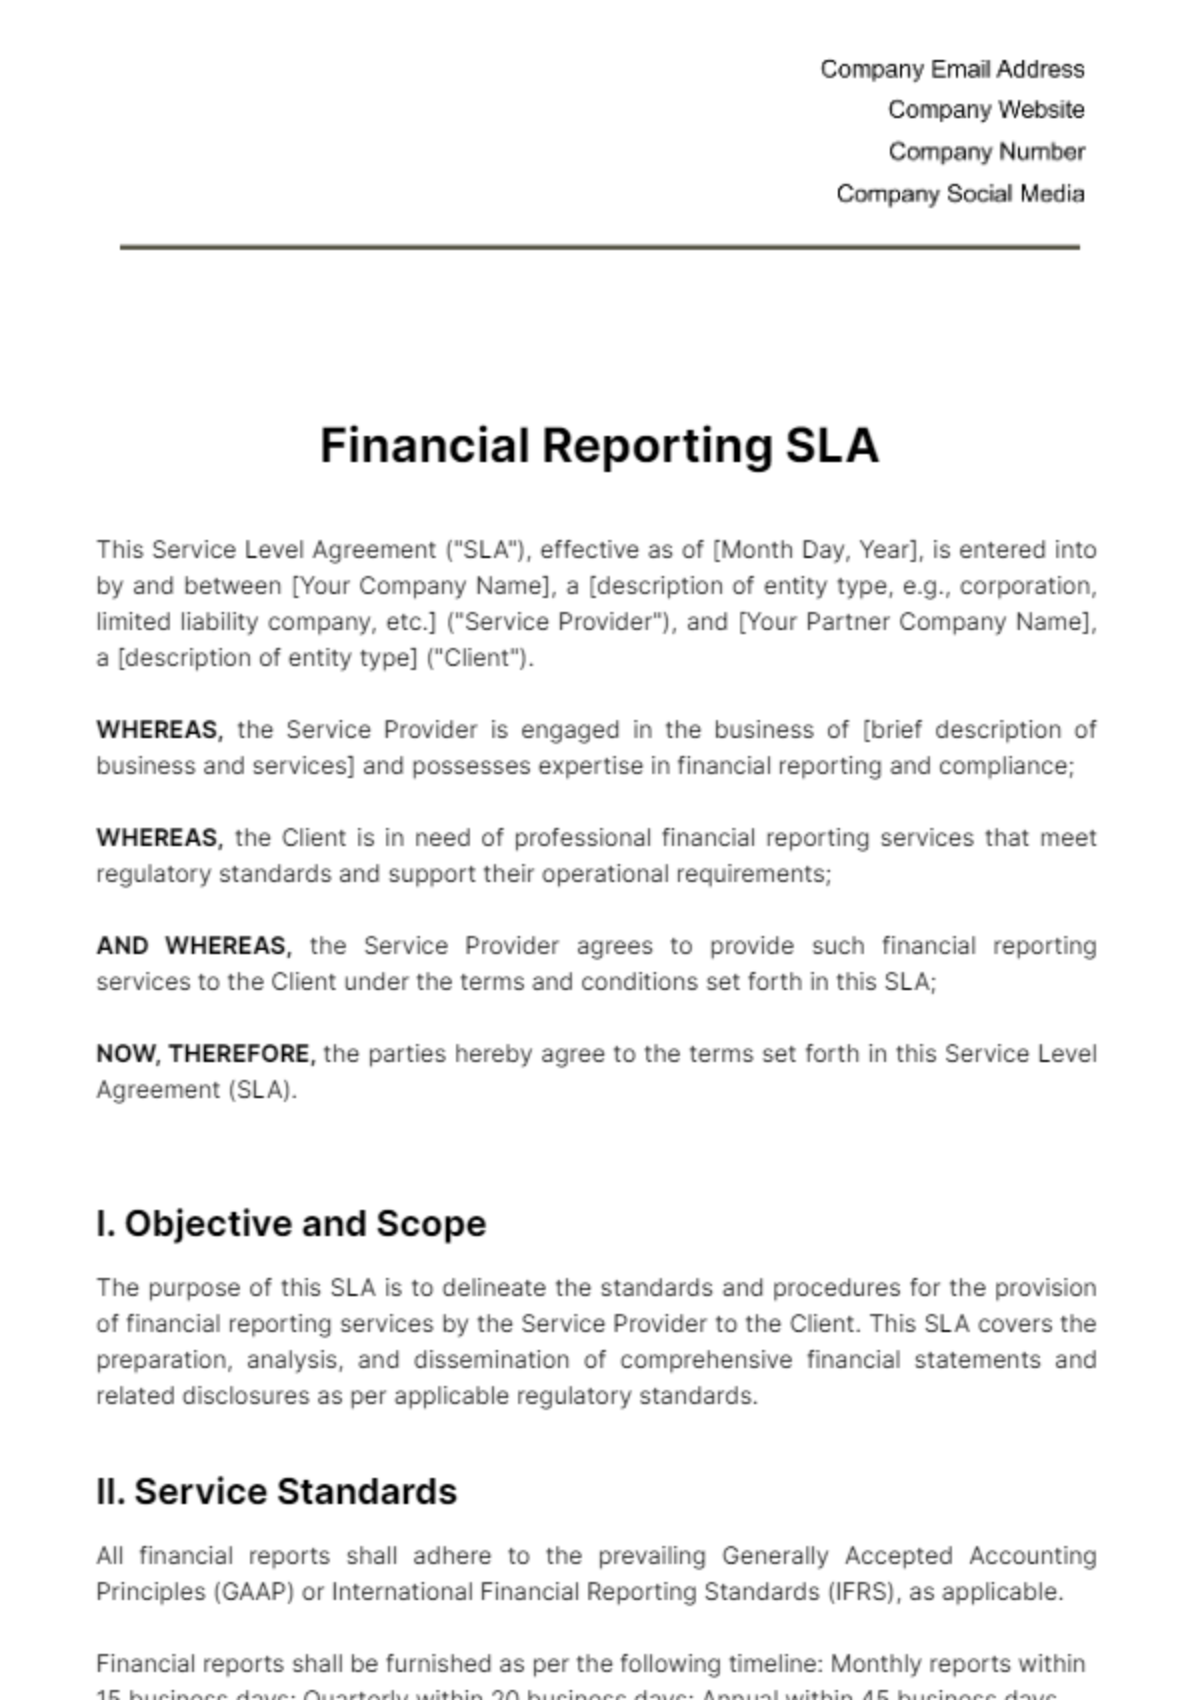 Financial Reporting SLA Template